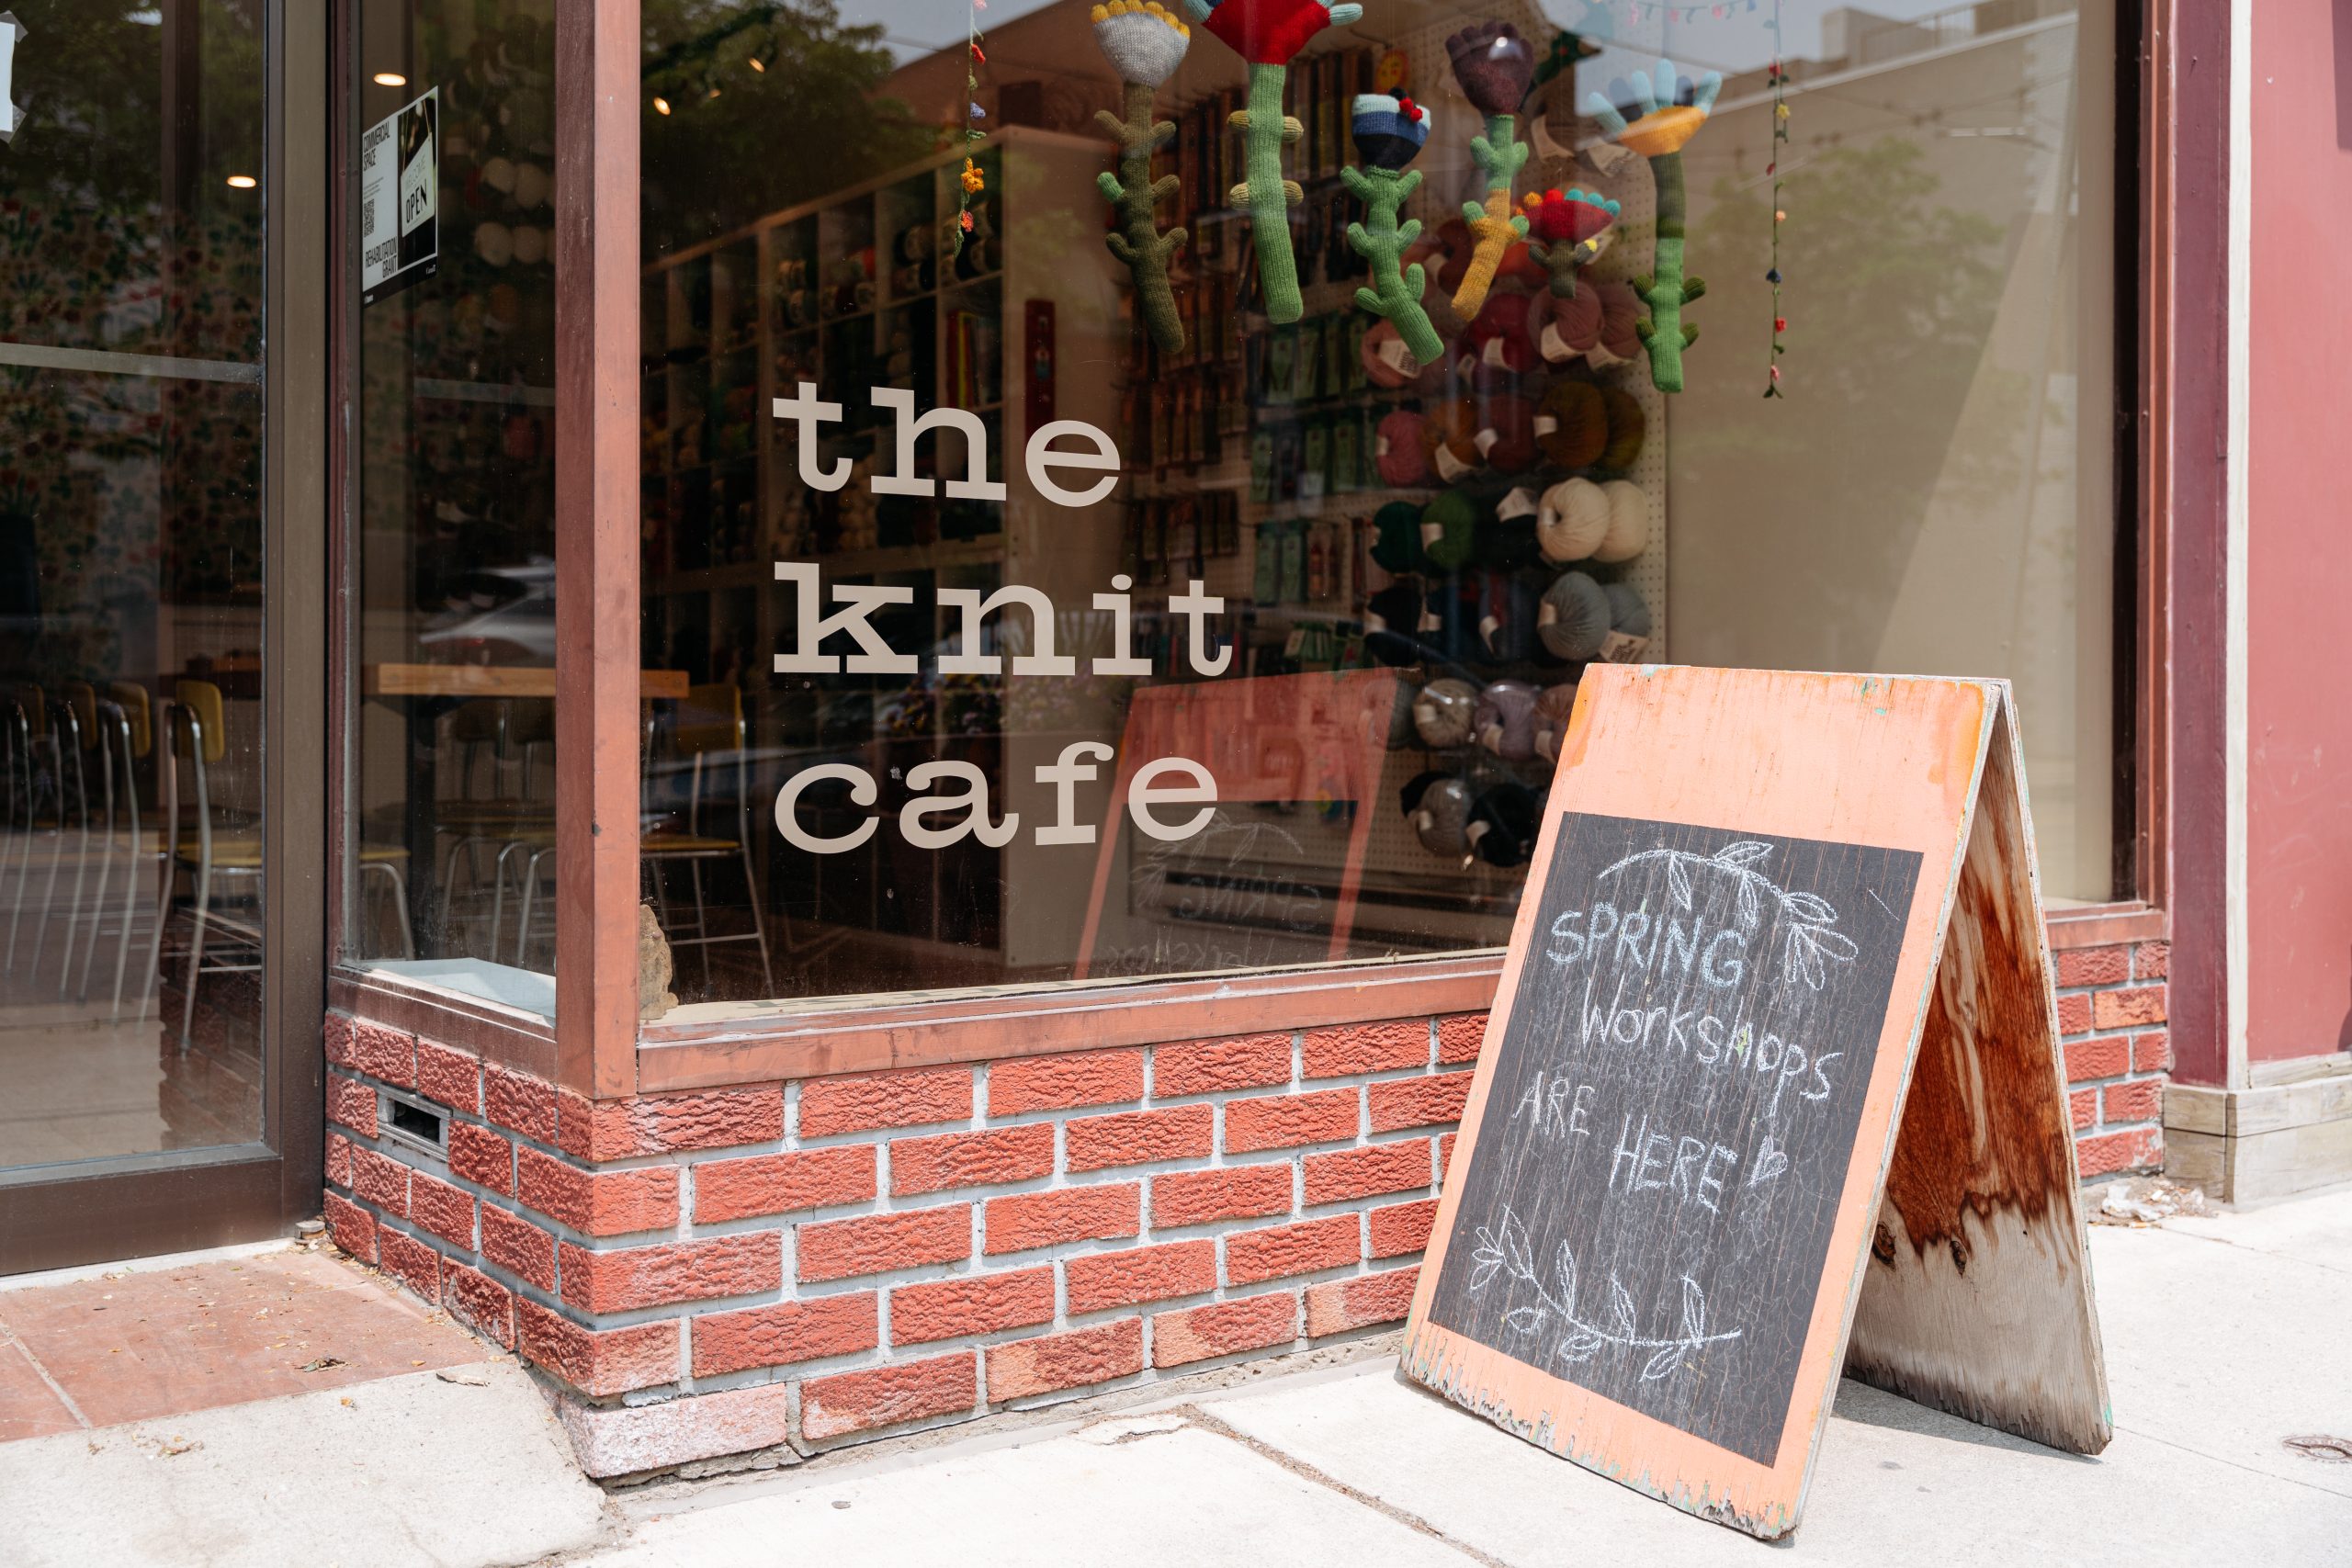 Exterior entrance of a shop named "The Knit Cafe" A-frame chalkboard sign reads "Spring Workshops Are Here."